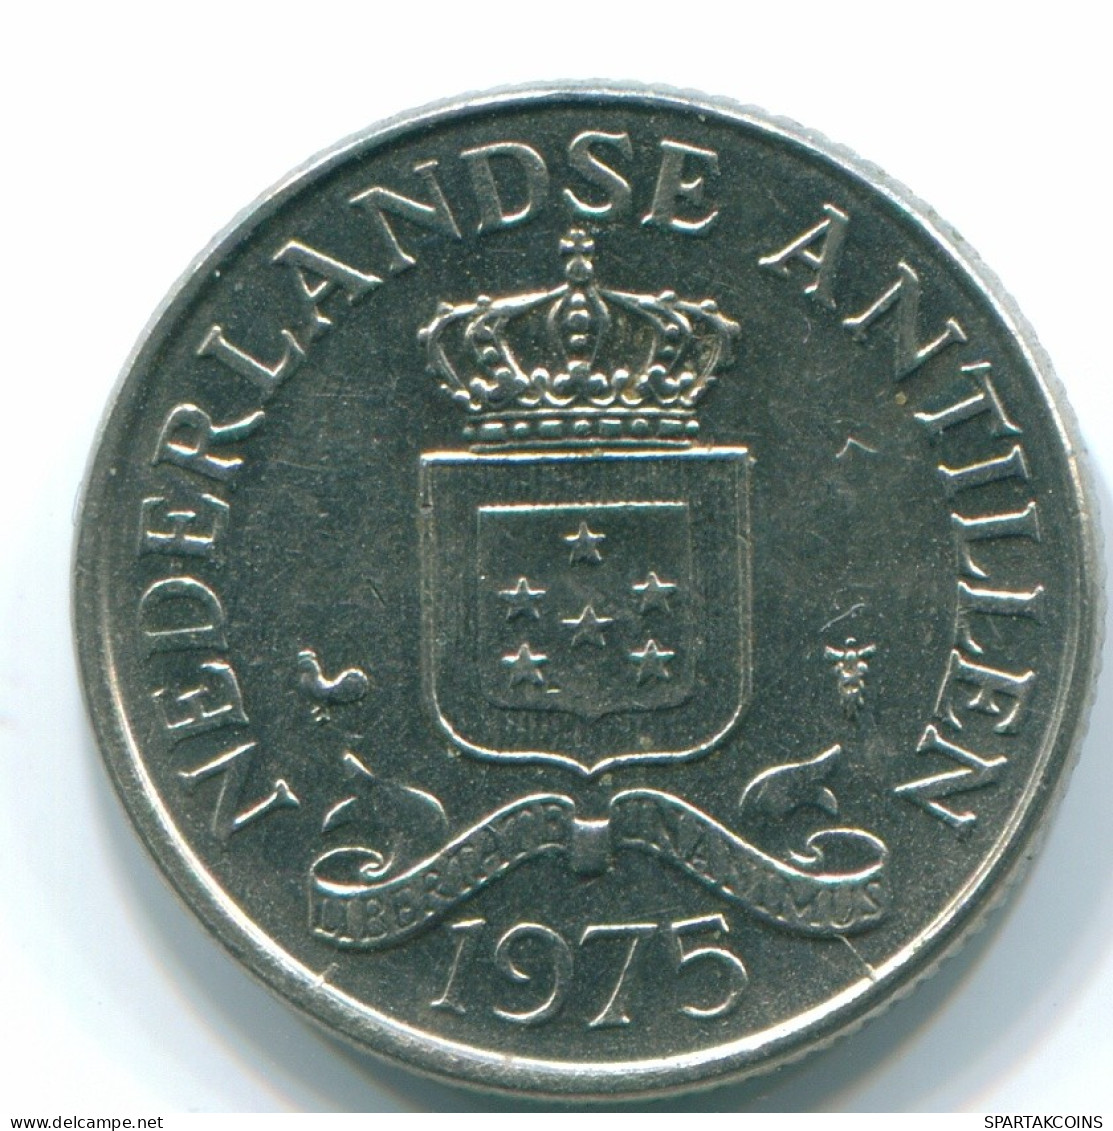 25 CENTS 1975 NIEDERLÄNDISCHE ANTILLEN Nickel Koloniale Münze #S11602.D.A - Nederlandse Antillen